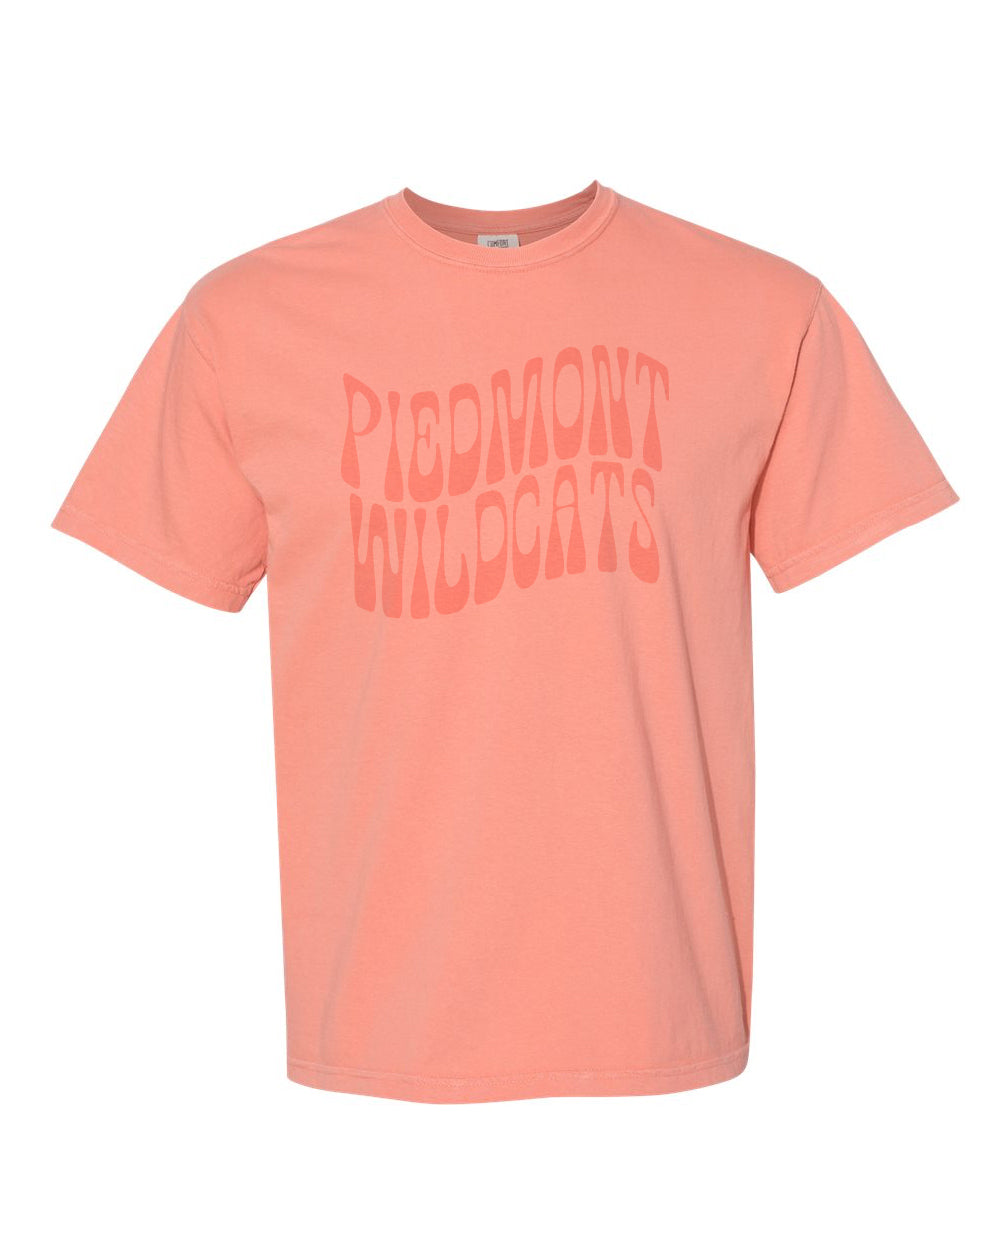 Piedmont Wildcats Monochromatic T-Shirt